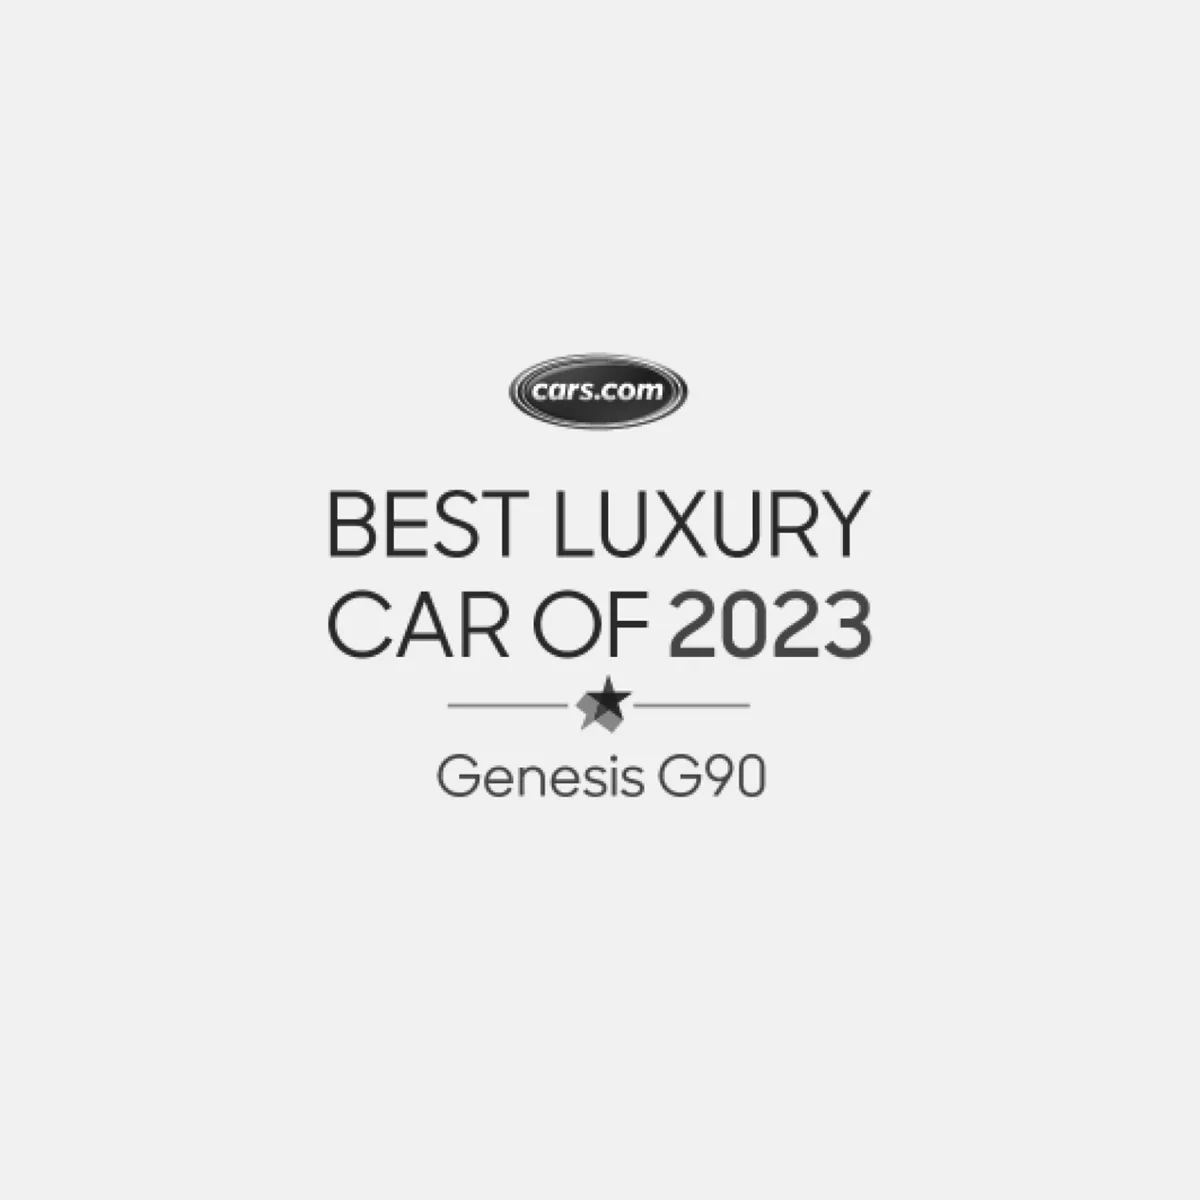 Genesis G90, mejor automóvil de lujo de 2023 por Cars.com.